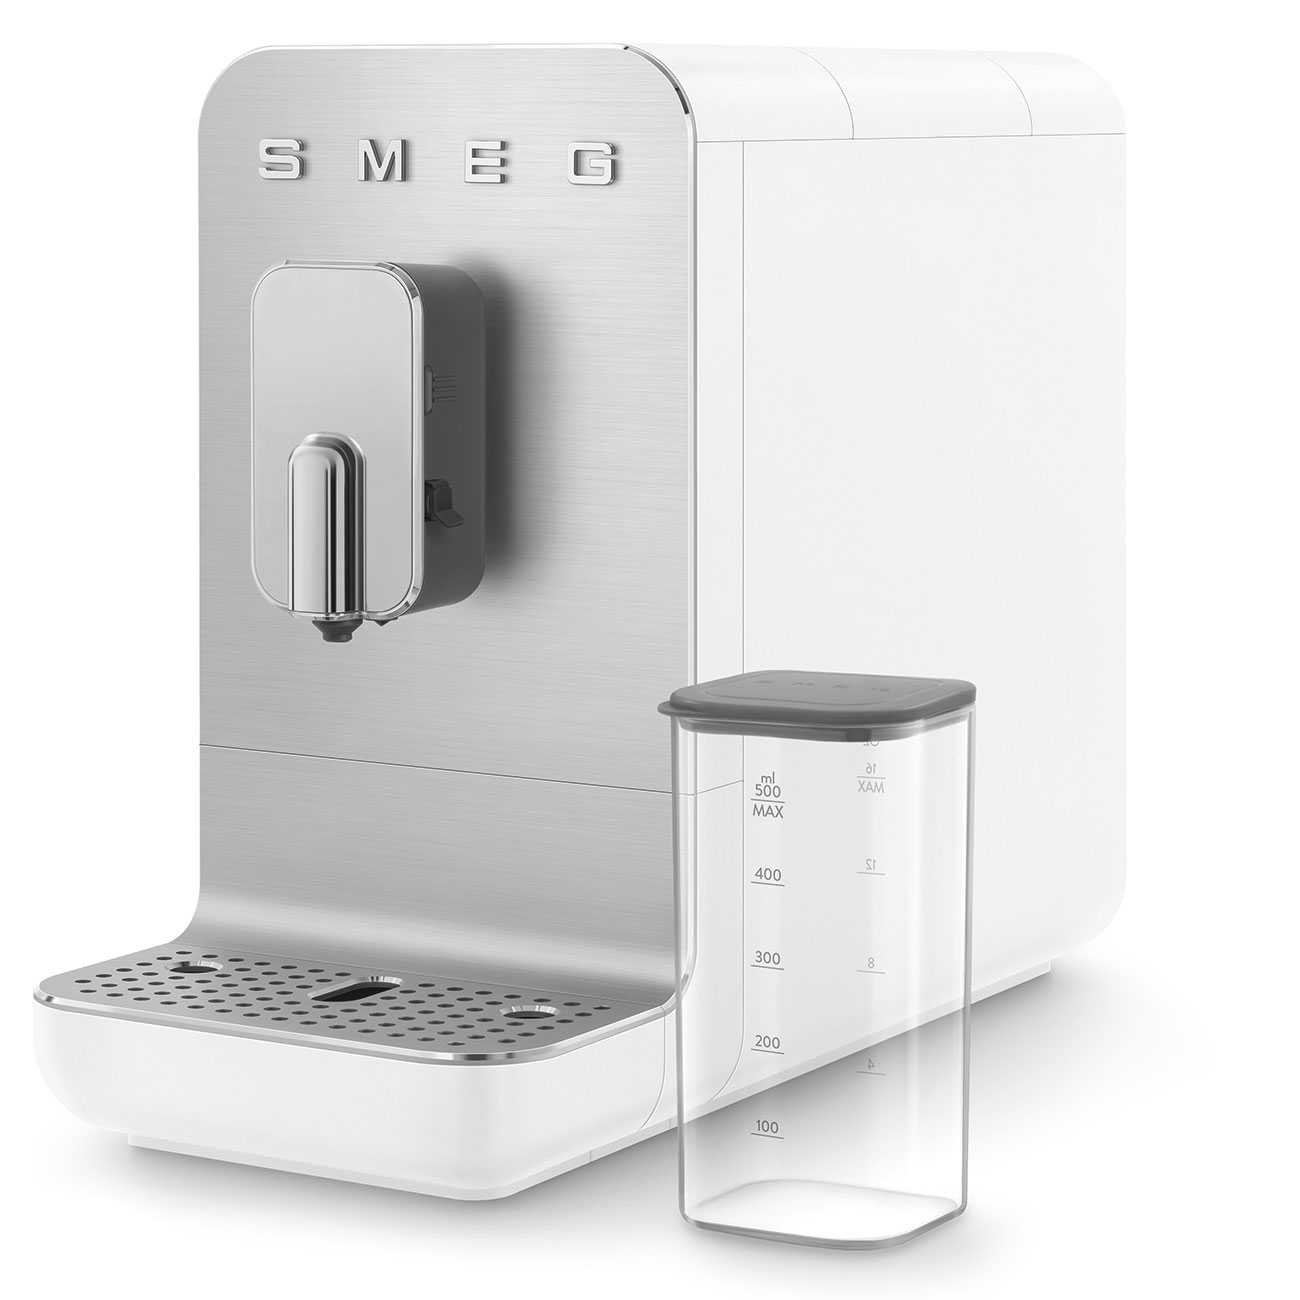 Smeg White Espresso Manual Coffee Machine_4